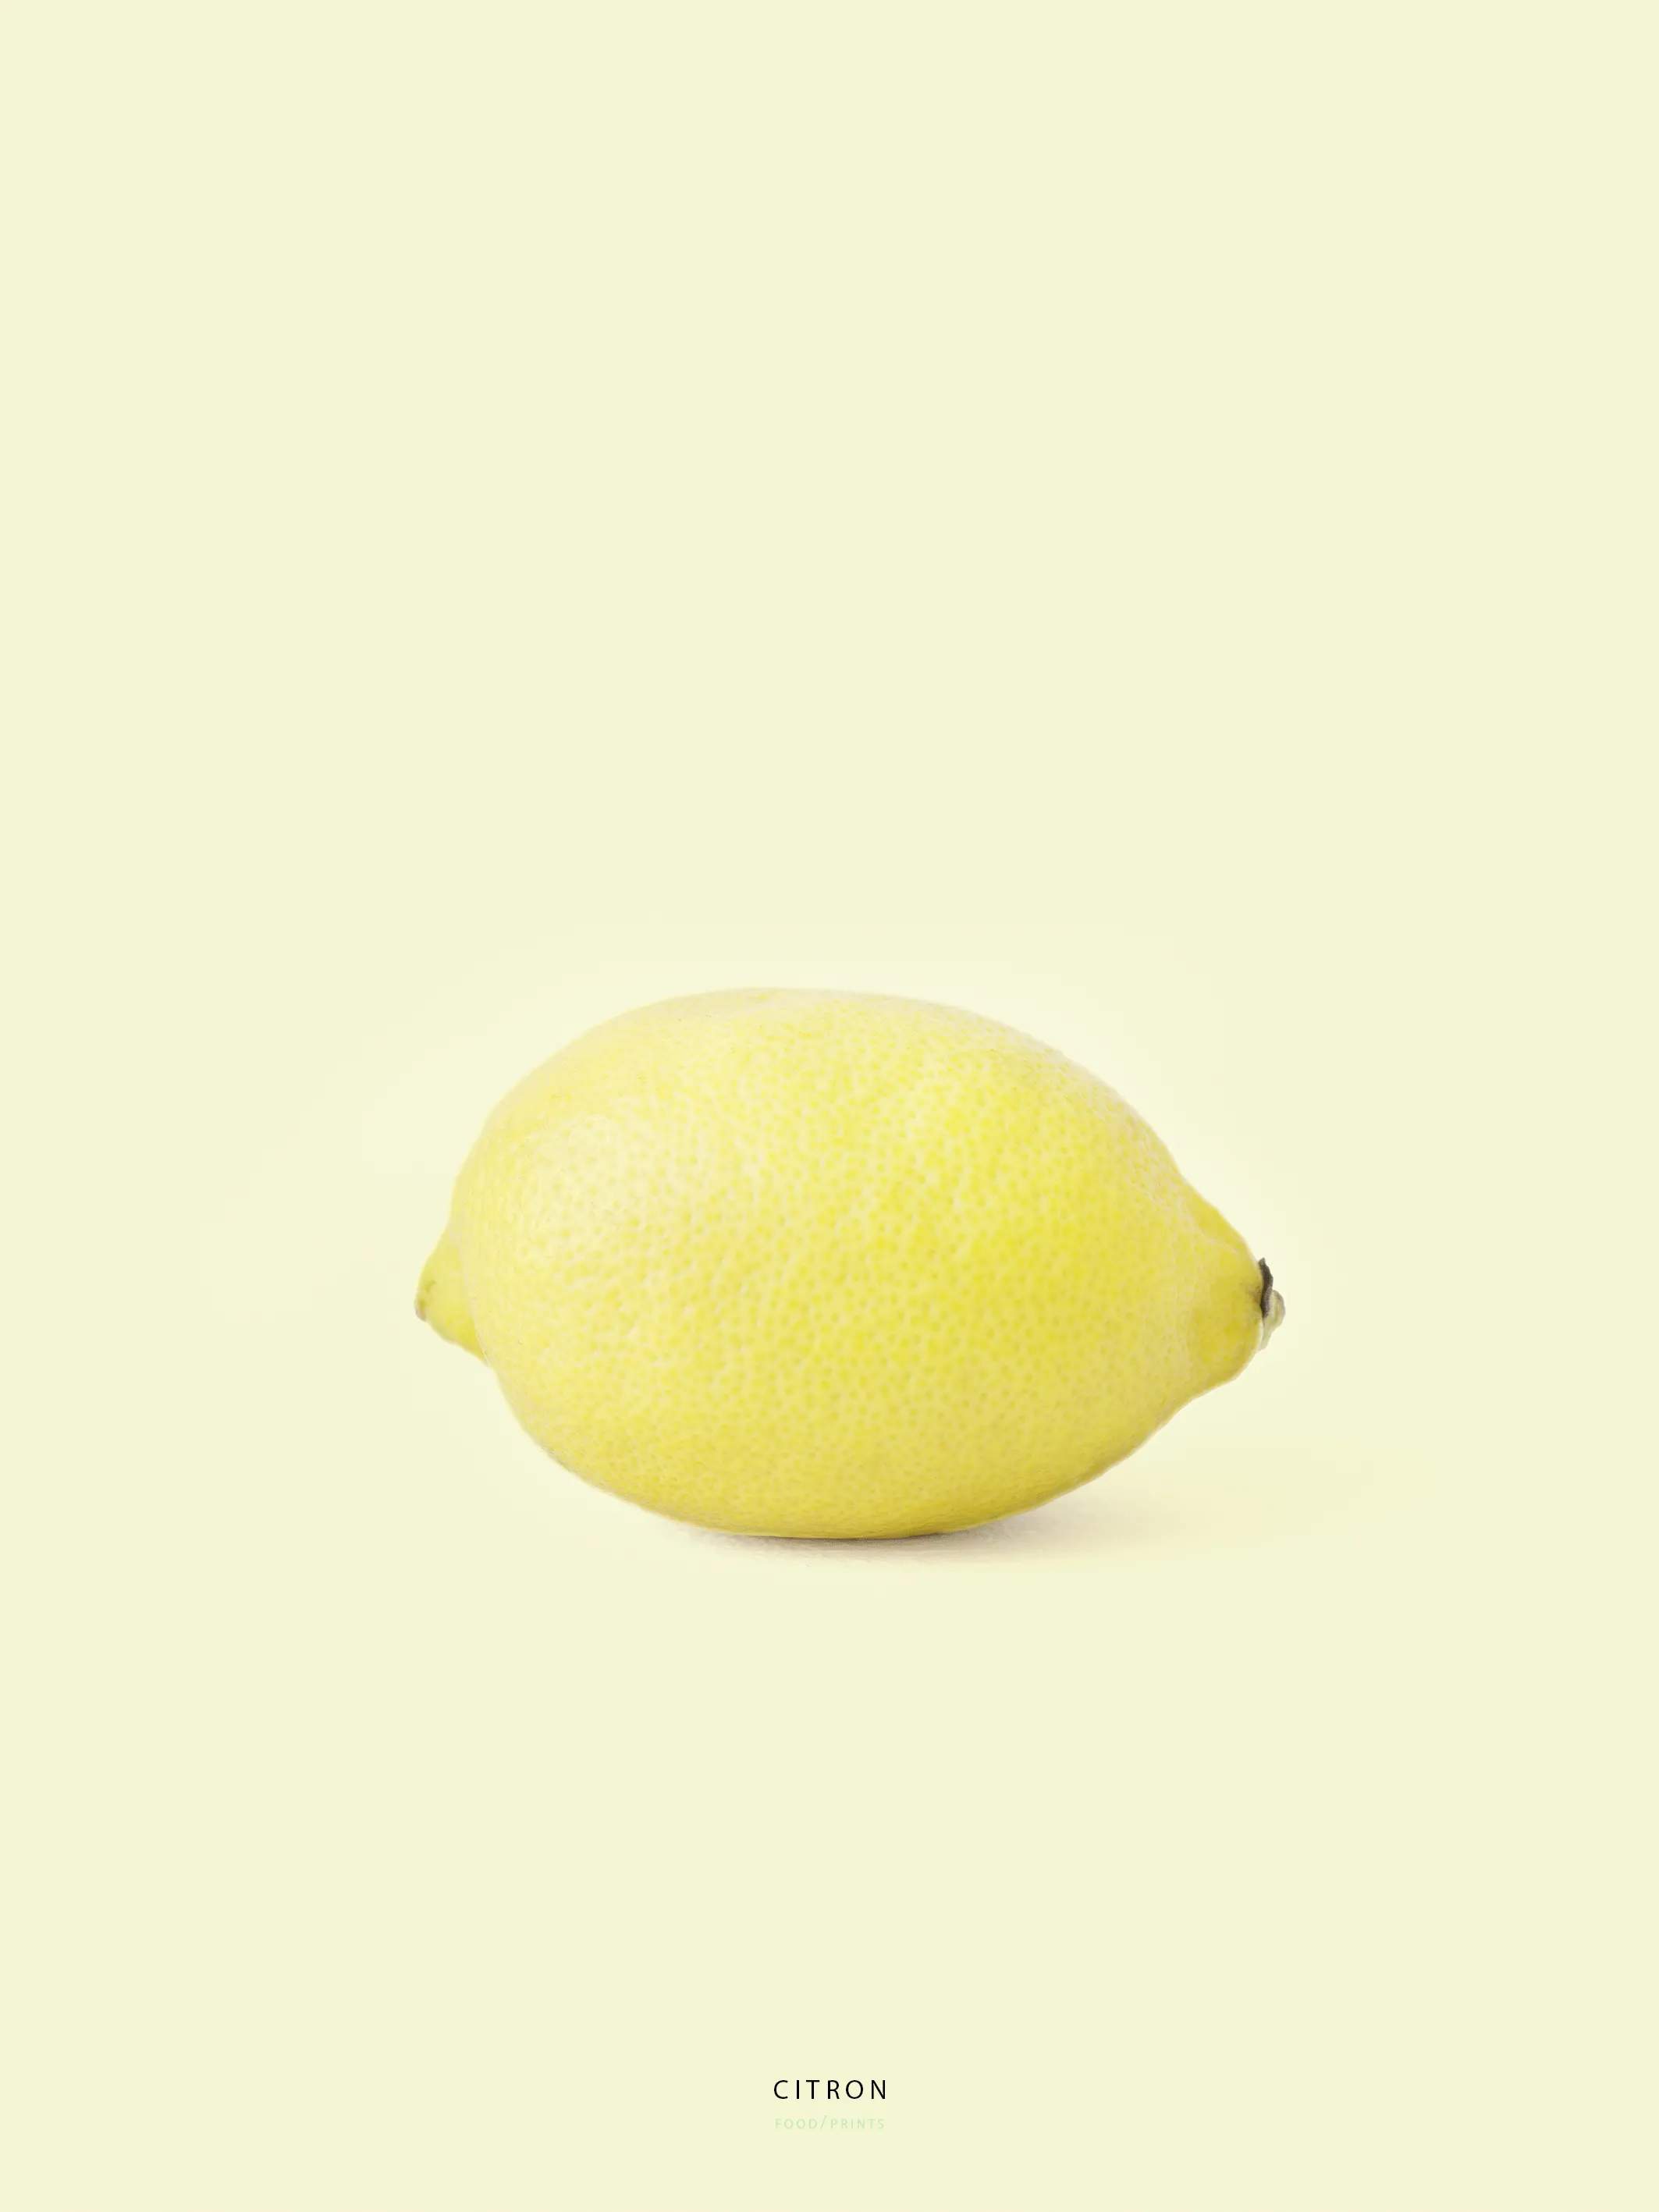 MAD PLAKAT Plakat Citron, gul, large